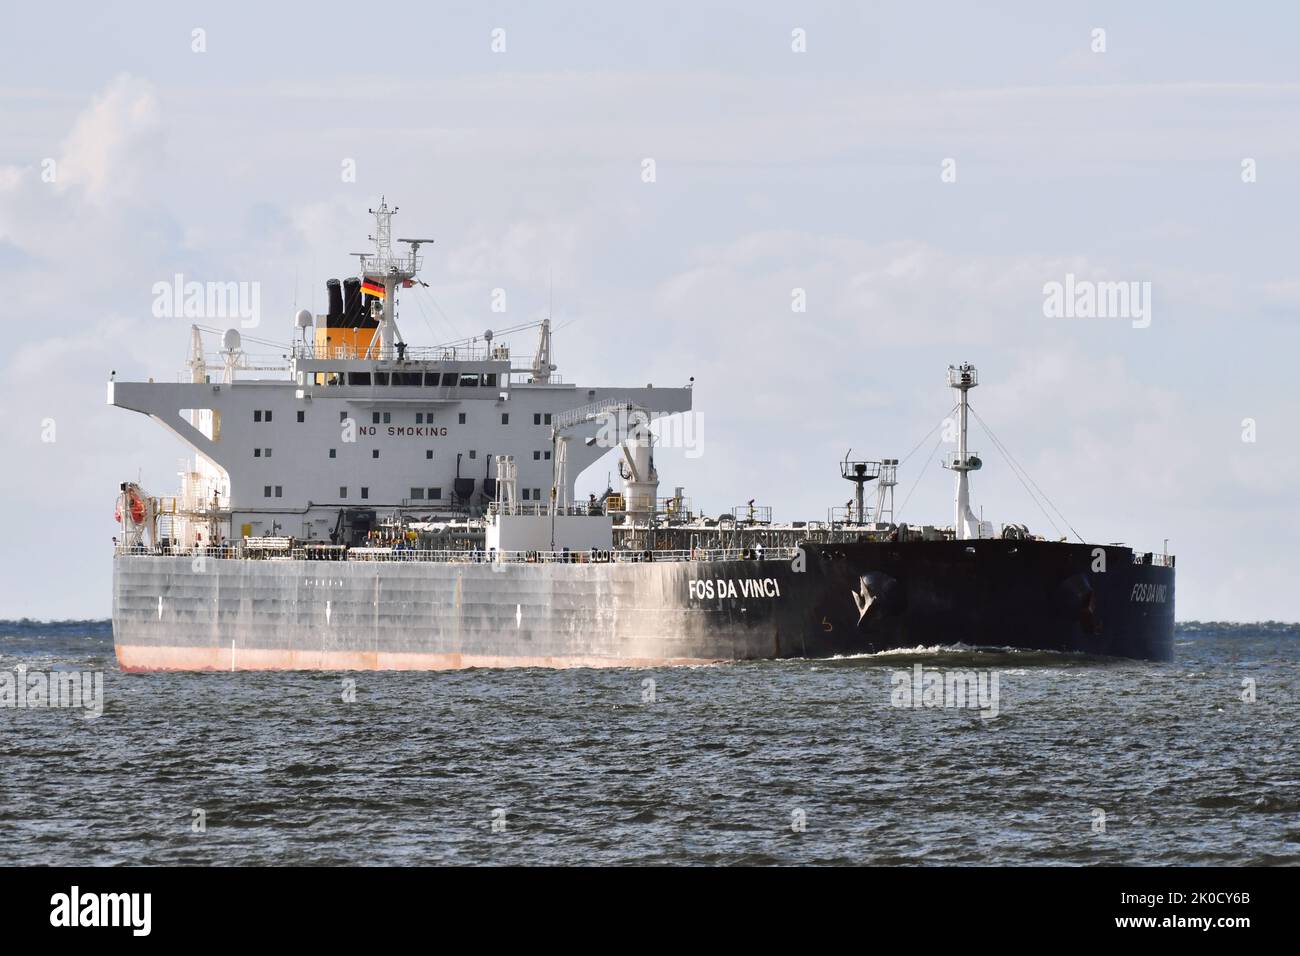 Aframax Oil Products Tanker FOS DA VINCI passing Cuxhaven bound for Brunsbüttel Stock Photo